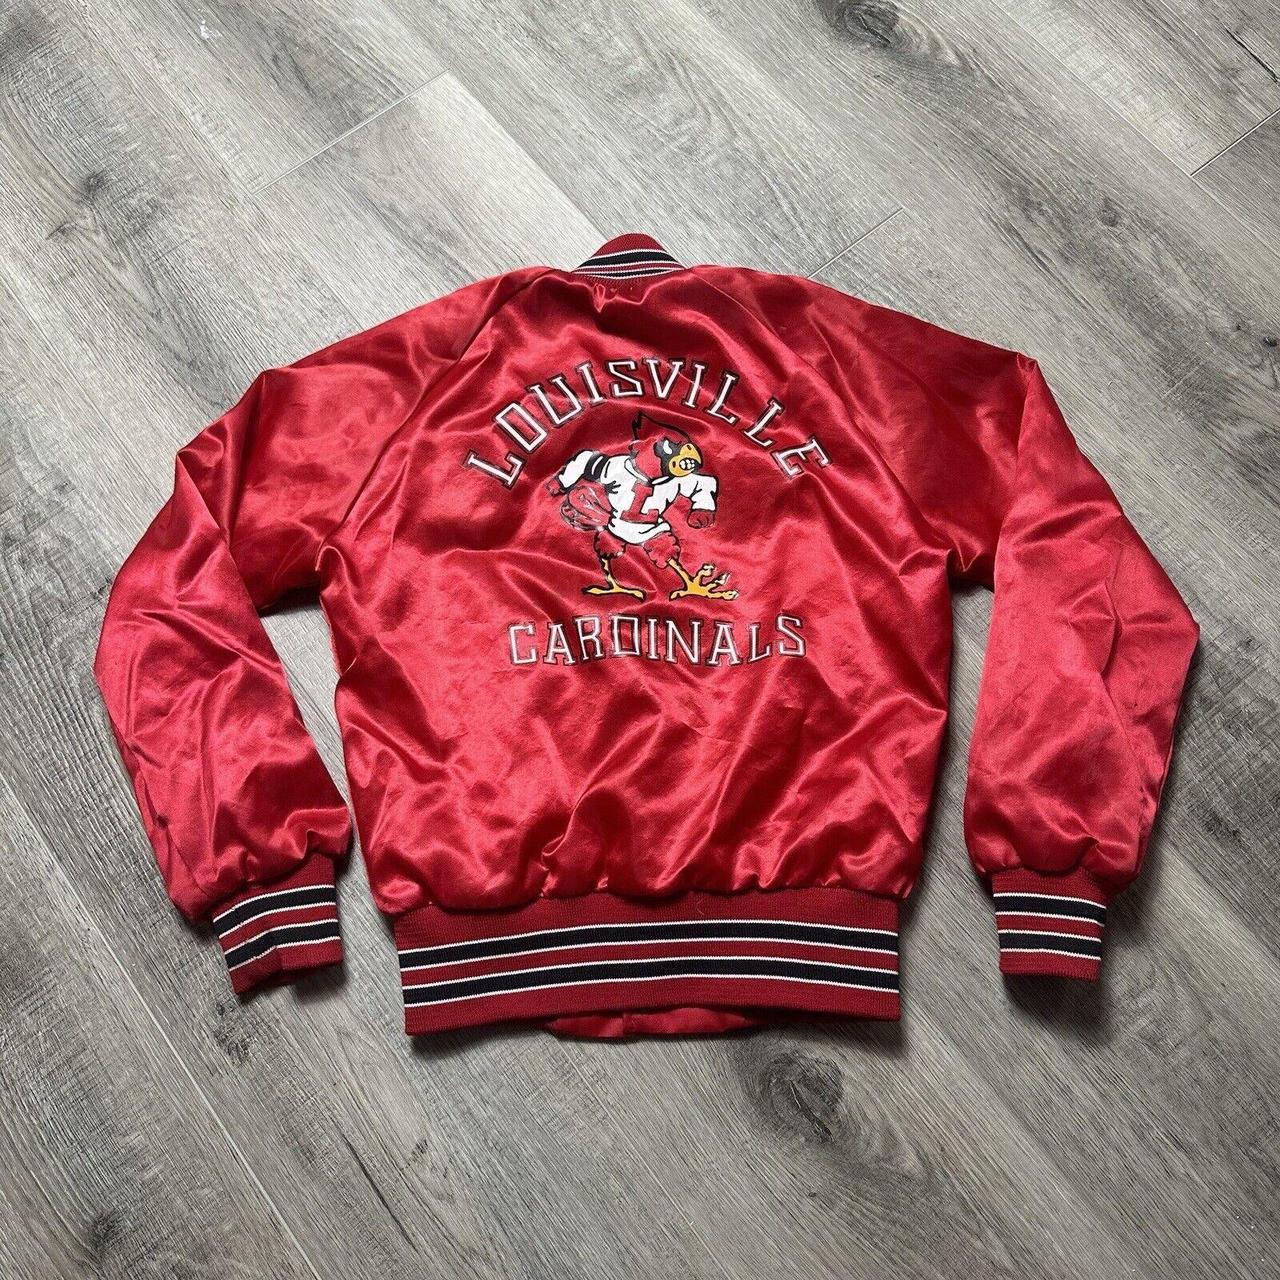 Vintage Louisville Cardinals Chalk Line Jacket